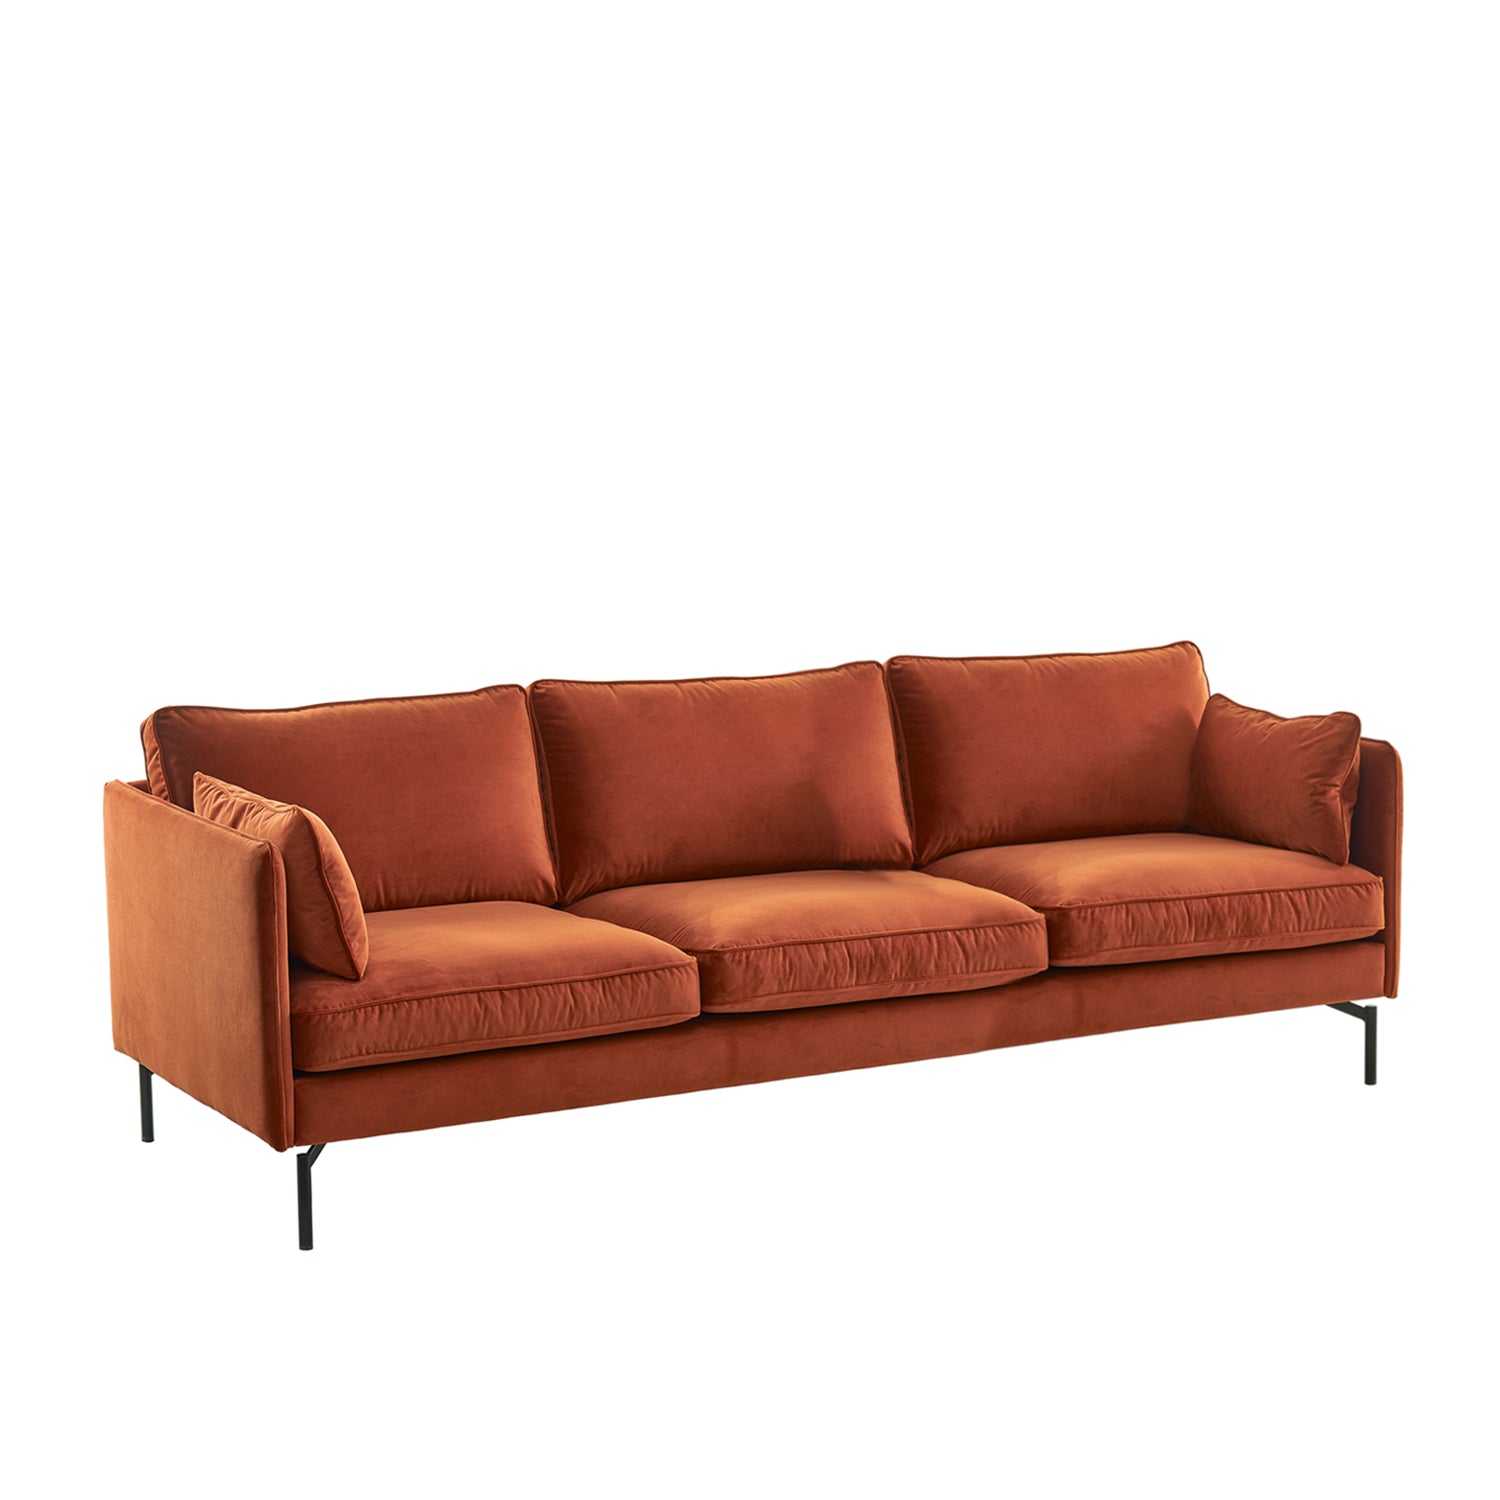 PPno.2 Sofa XL - The Design Choice